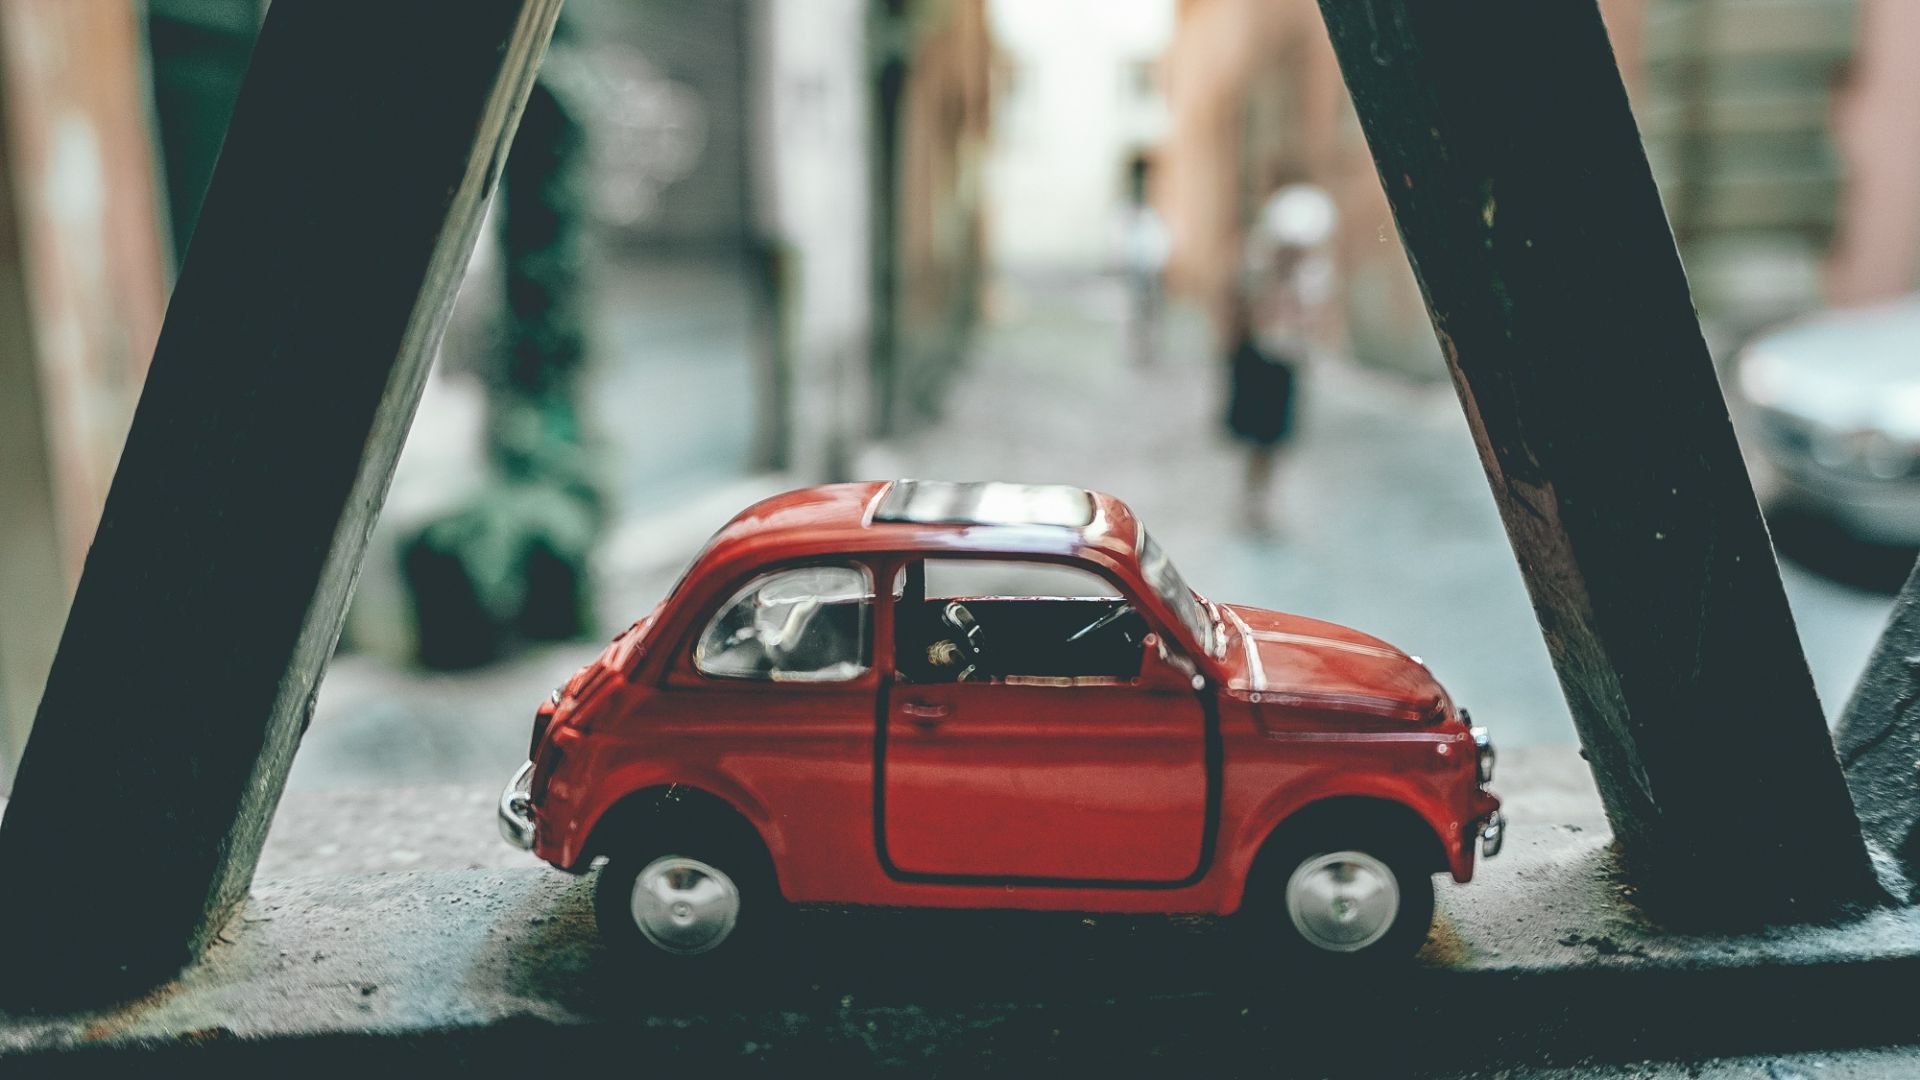 Wallpaper Window Re Maquette, miniature car, toy